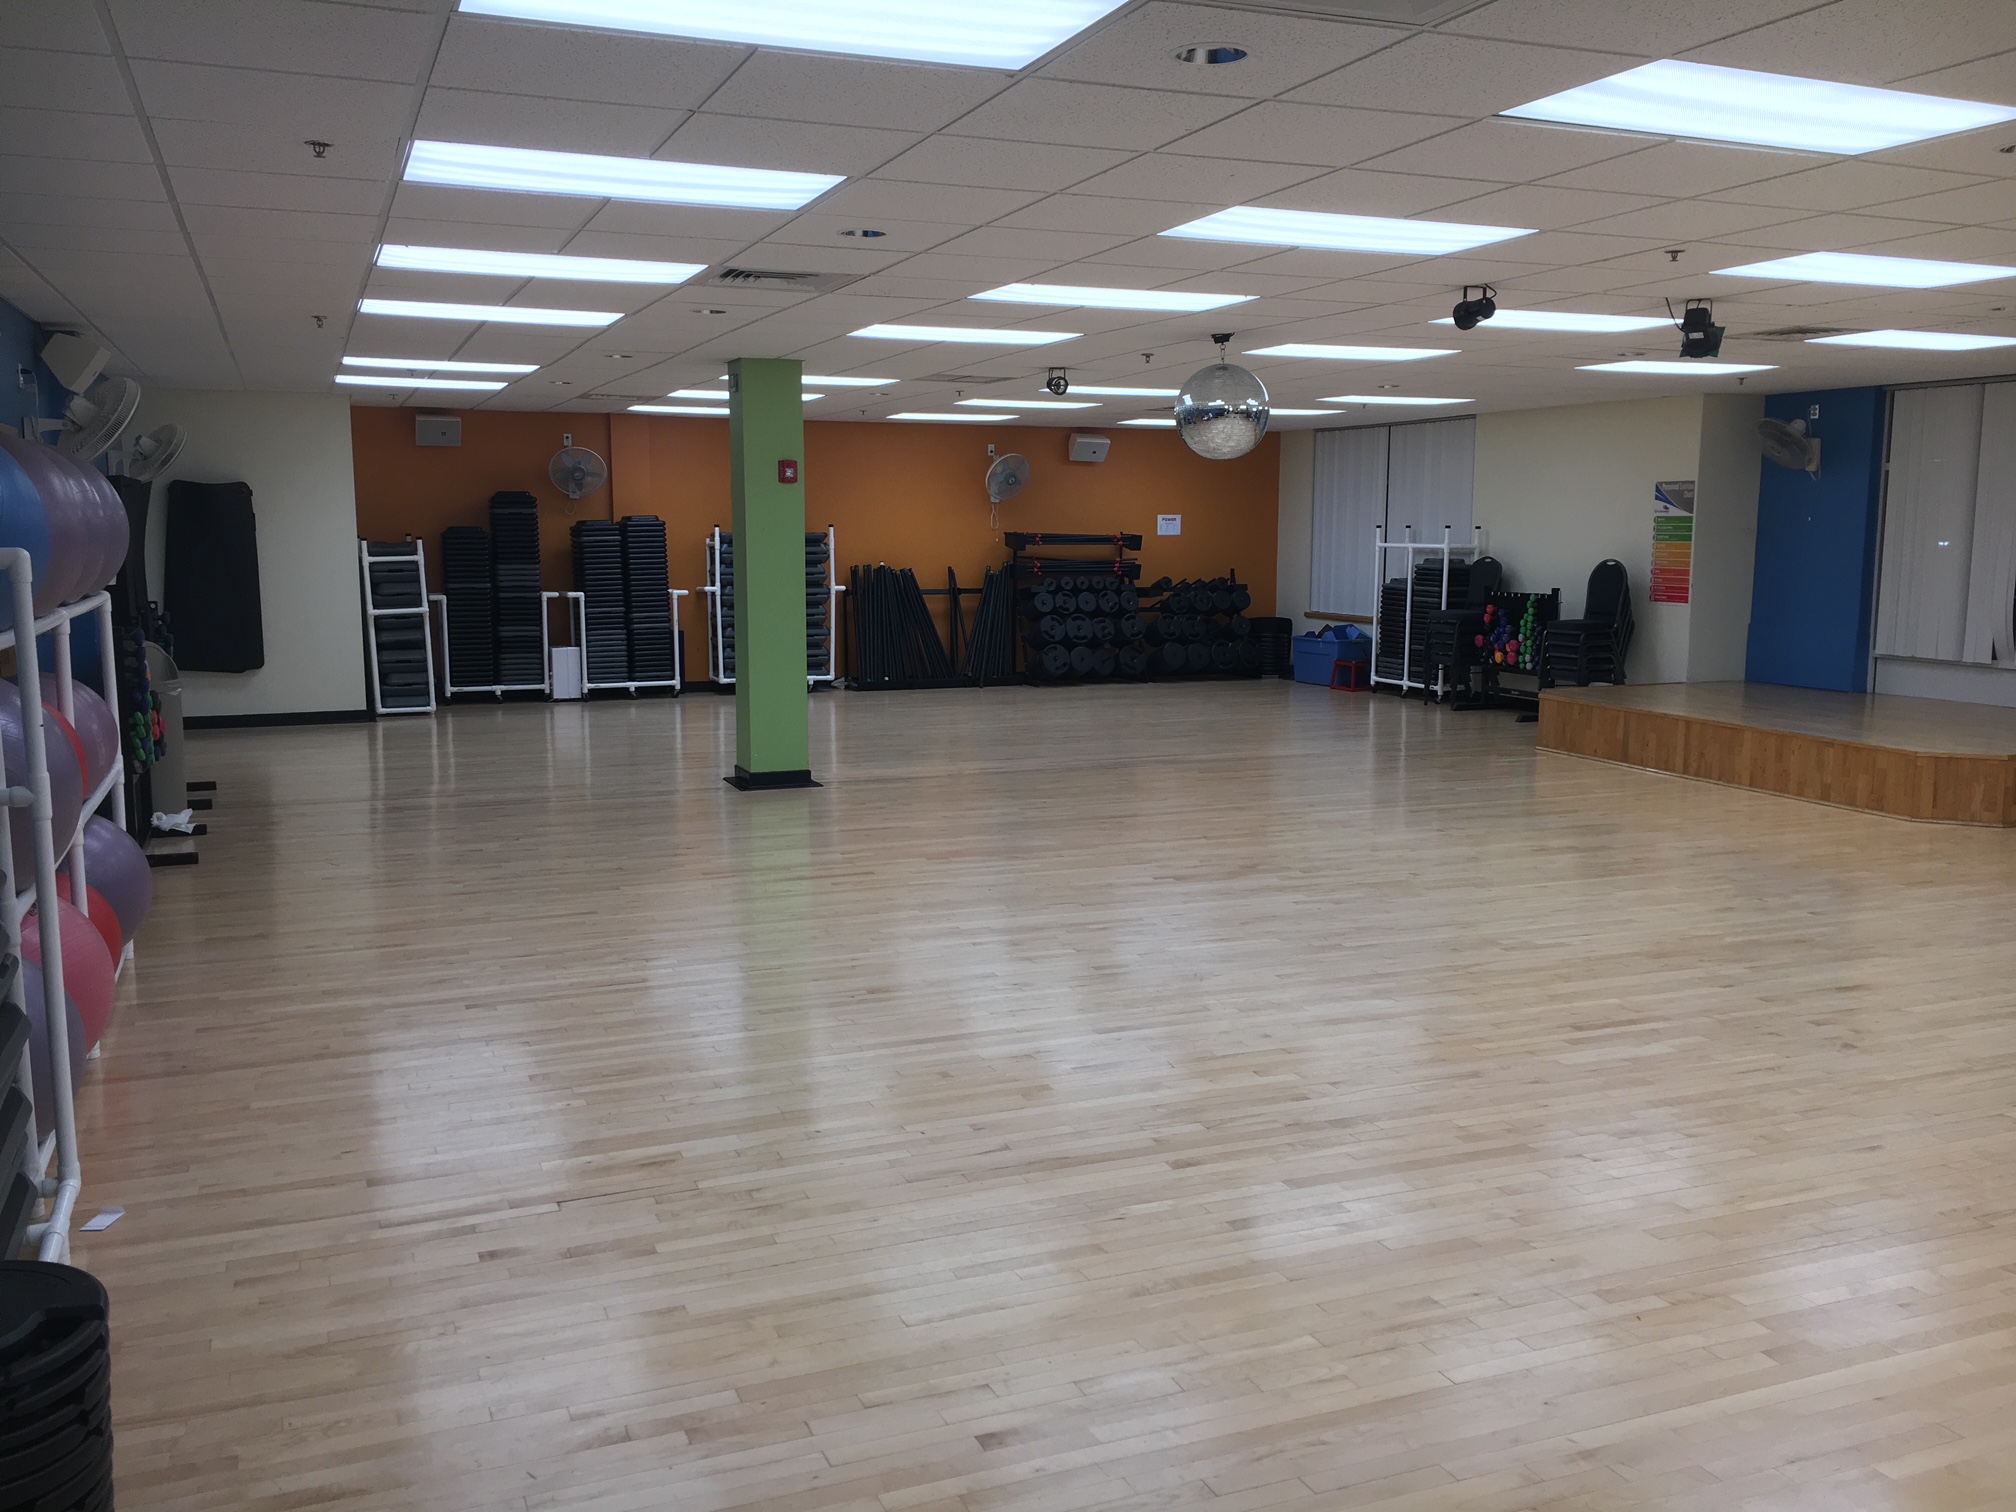 dance studio